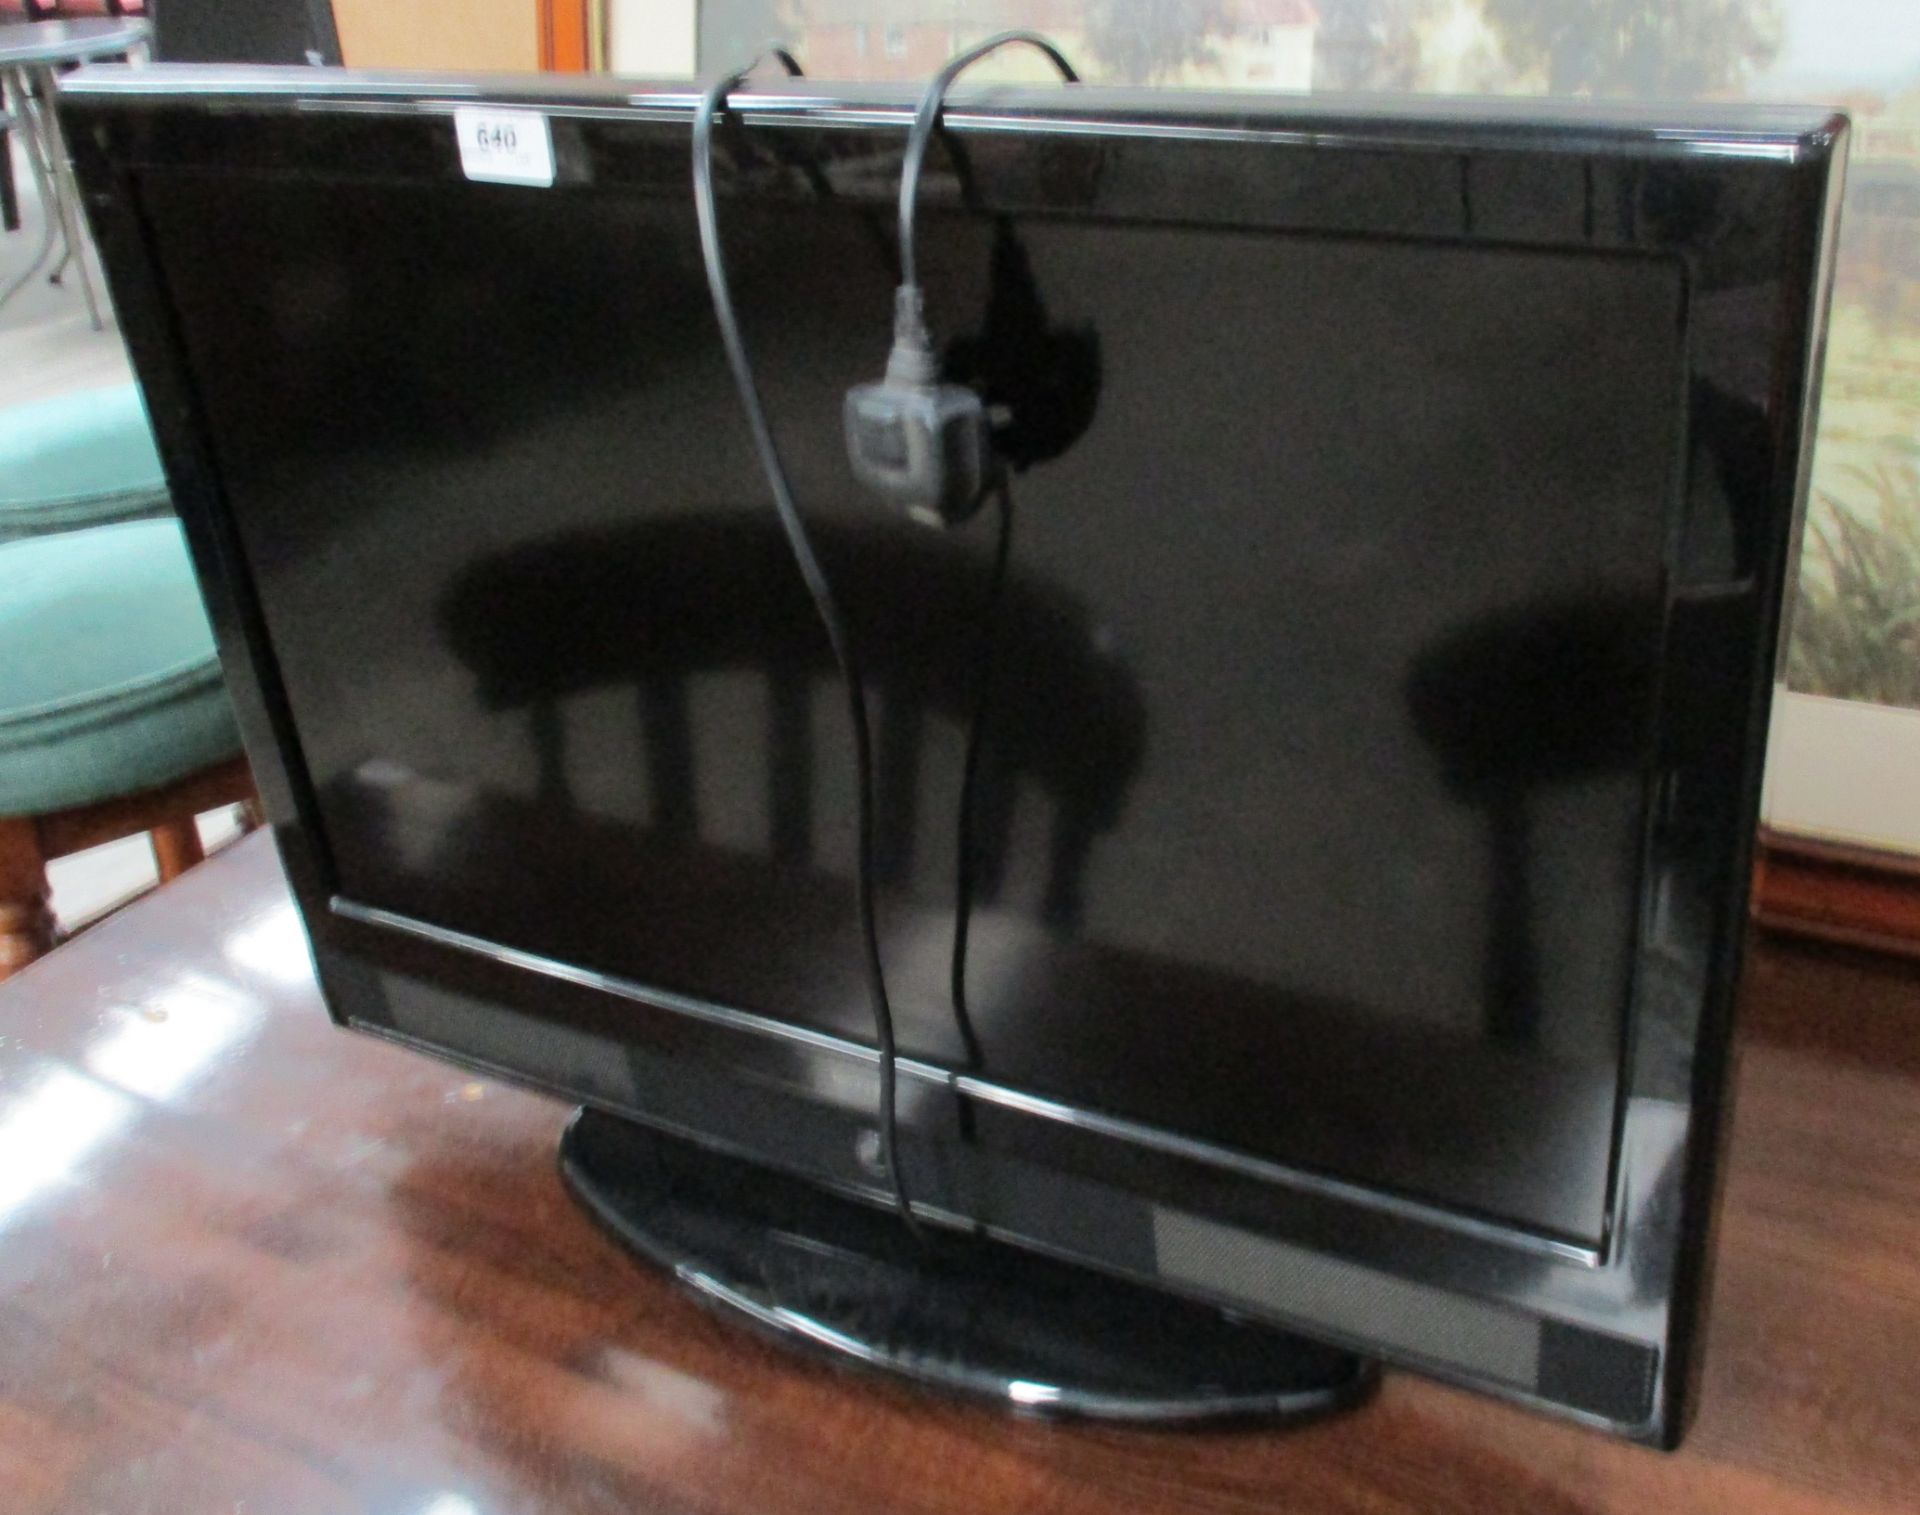 A Technika LCD26-229 26"" LCD digital TV/DVD combi - no remote control